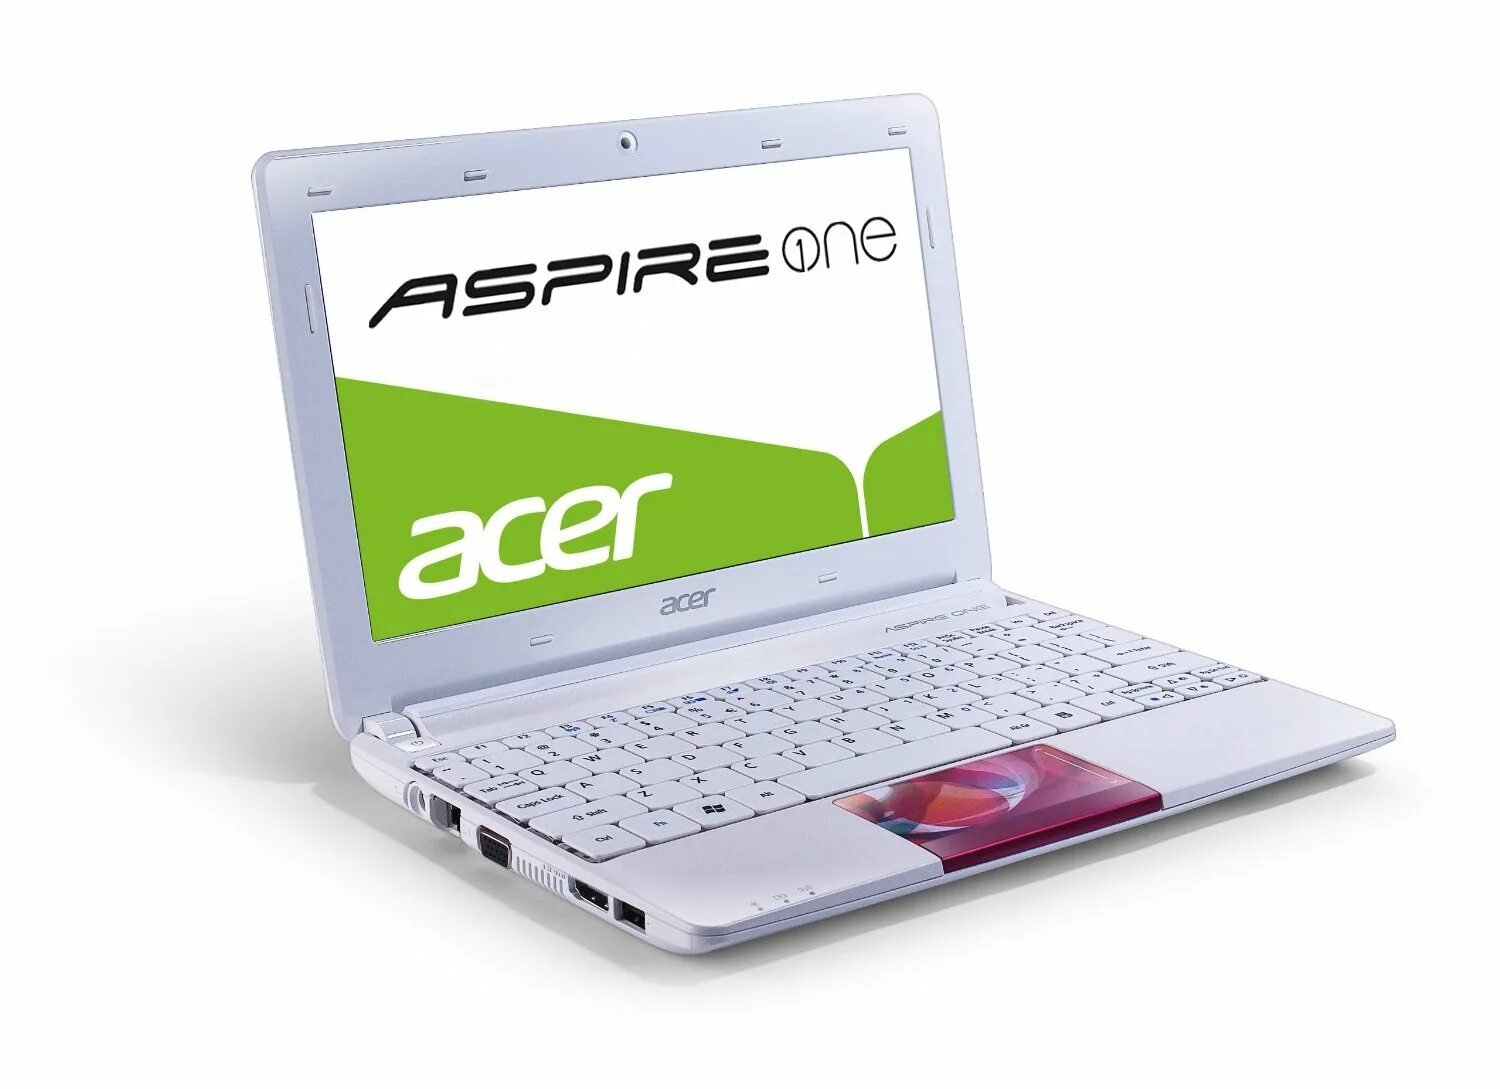 Acer Aspire one d270. Нетбук Acer Aspire one d270. ASUS Aspire one d270. D270 Acer Aspire.